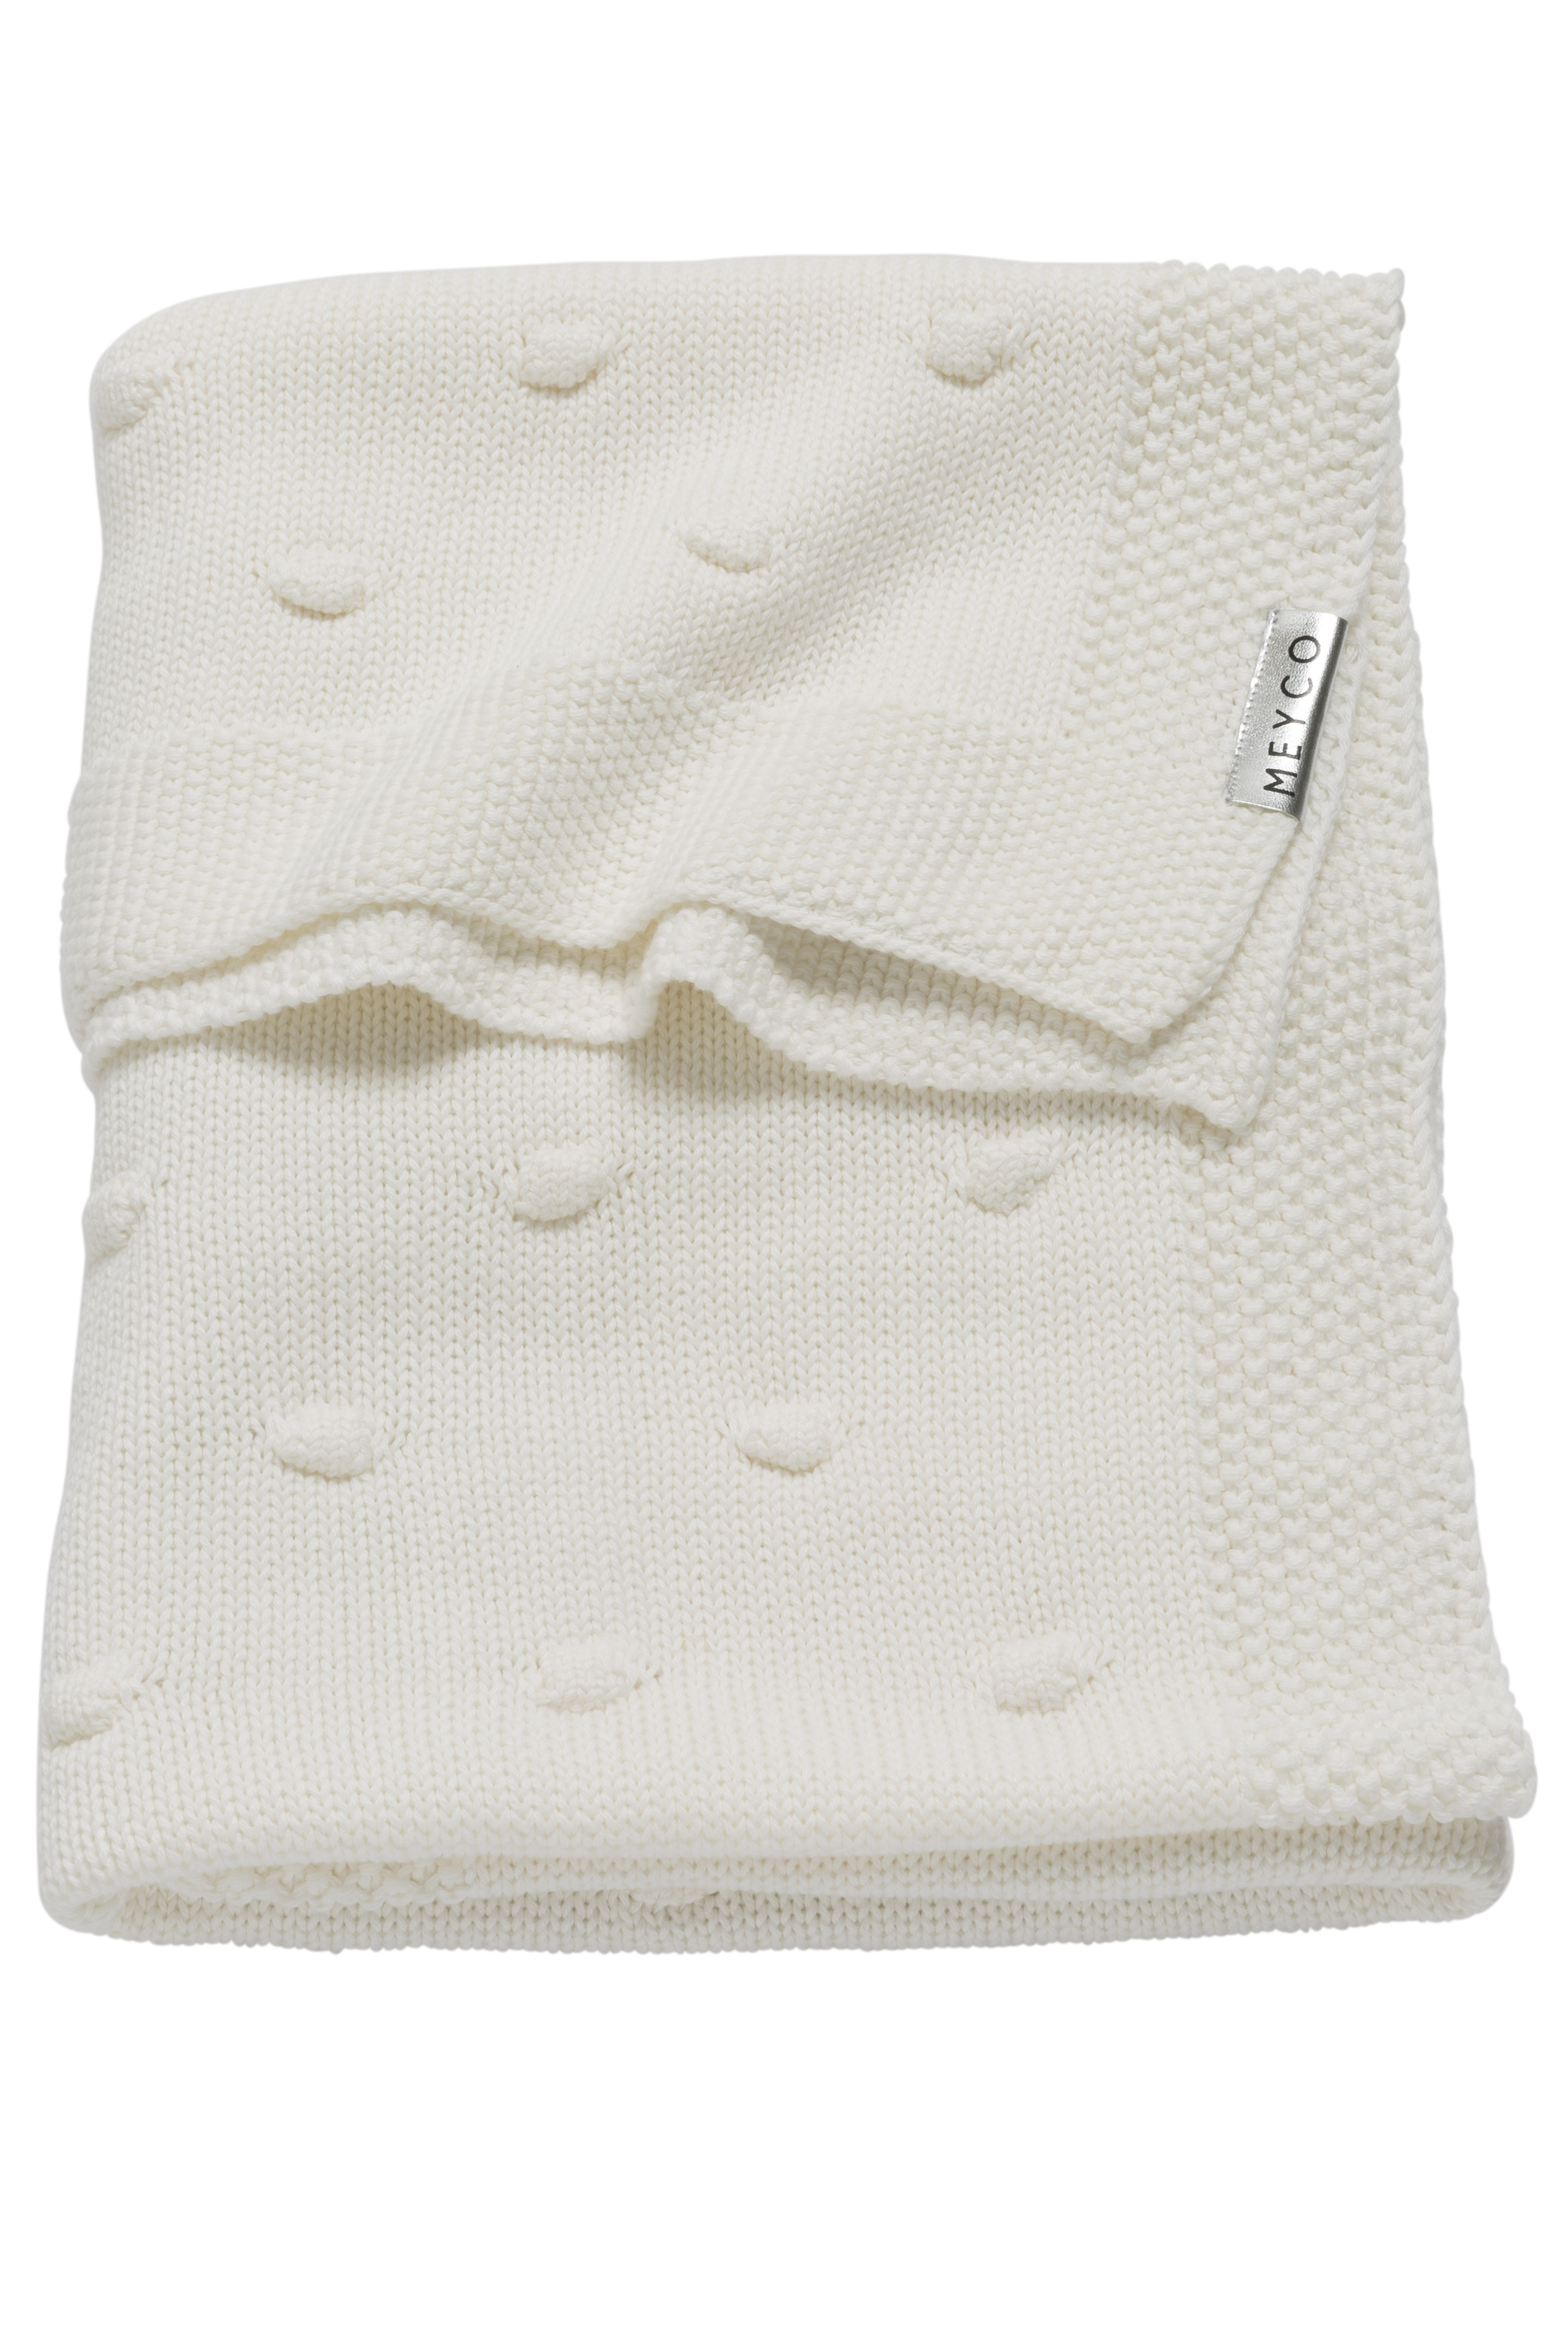 Crib Blanket Knots - Offwhite - 75X100cm